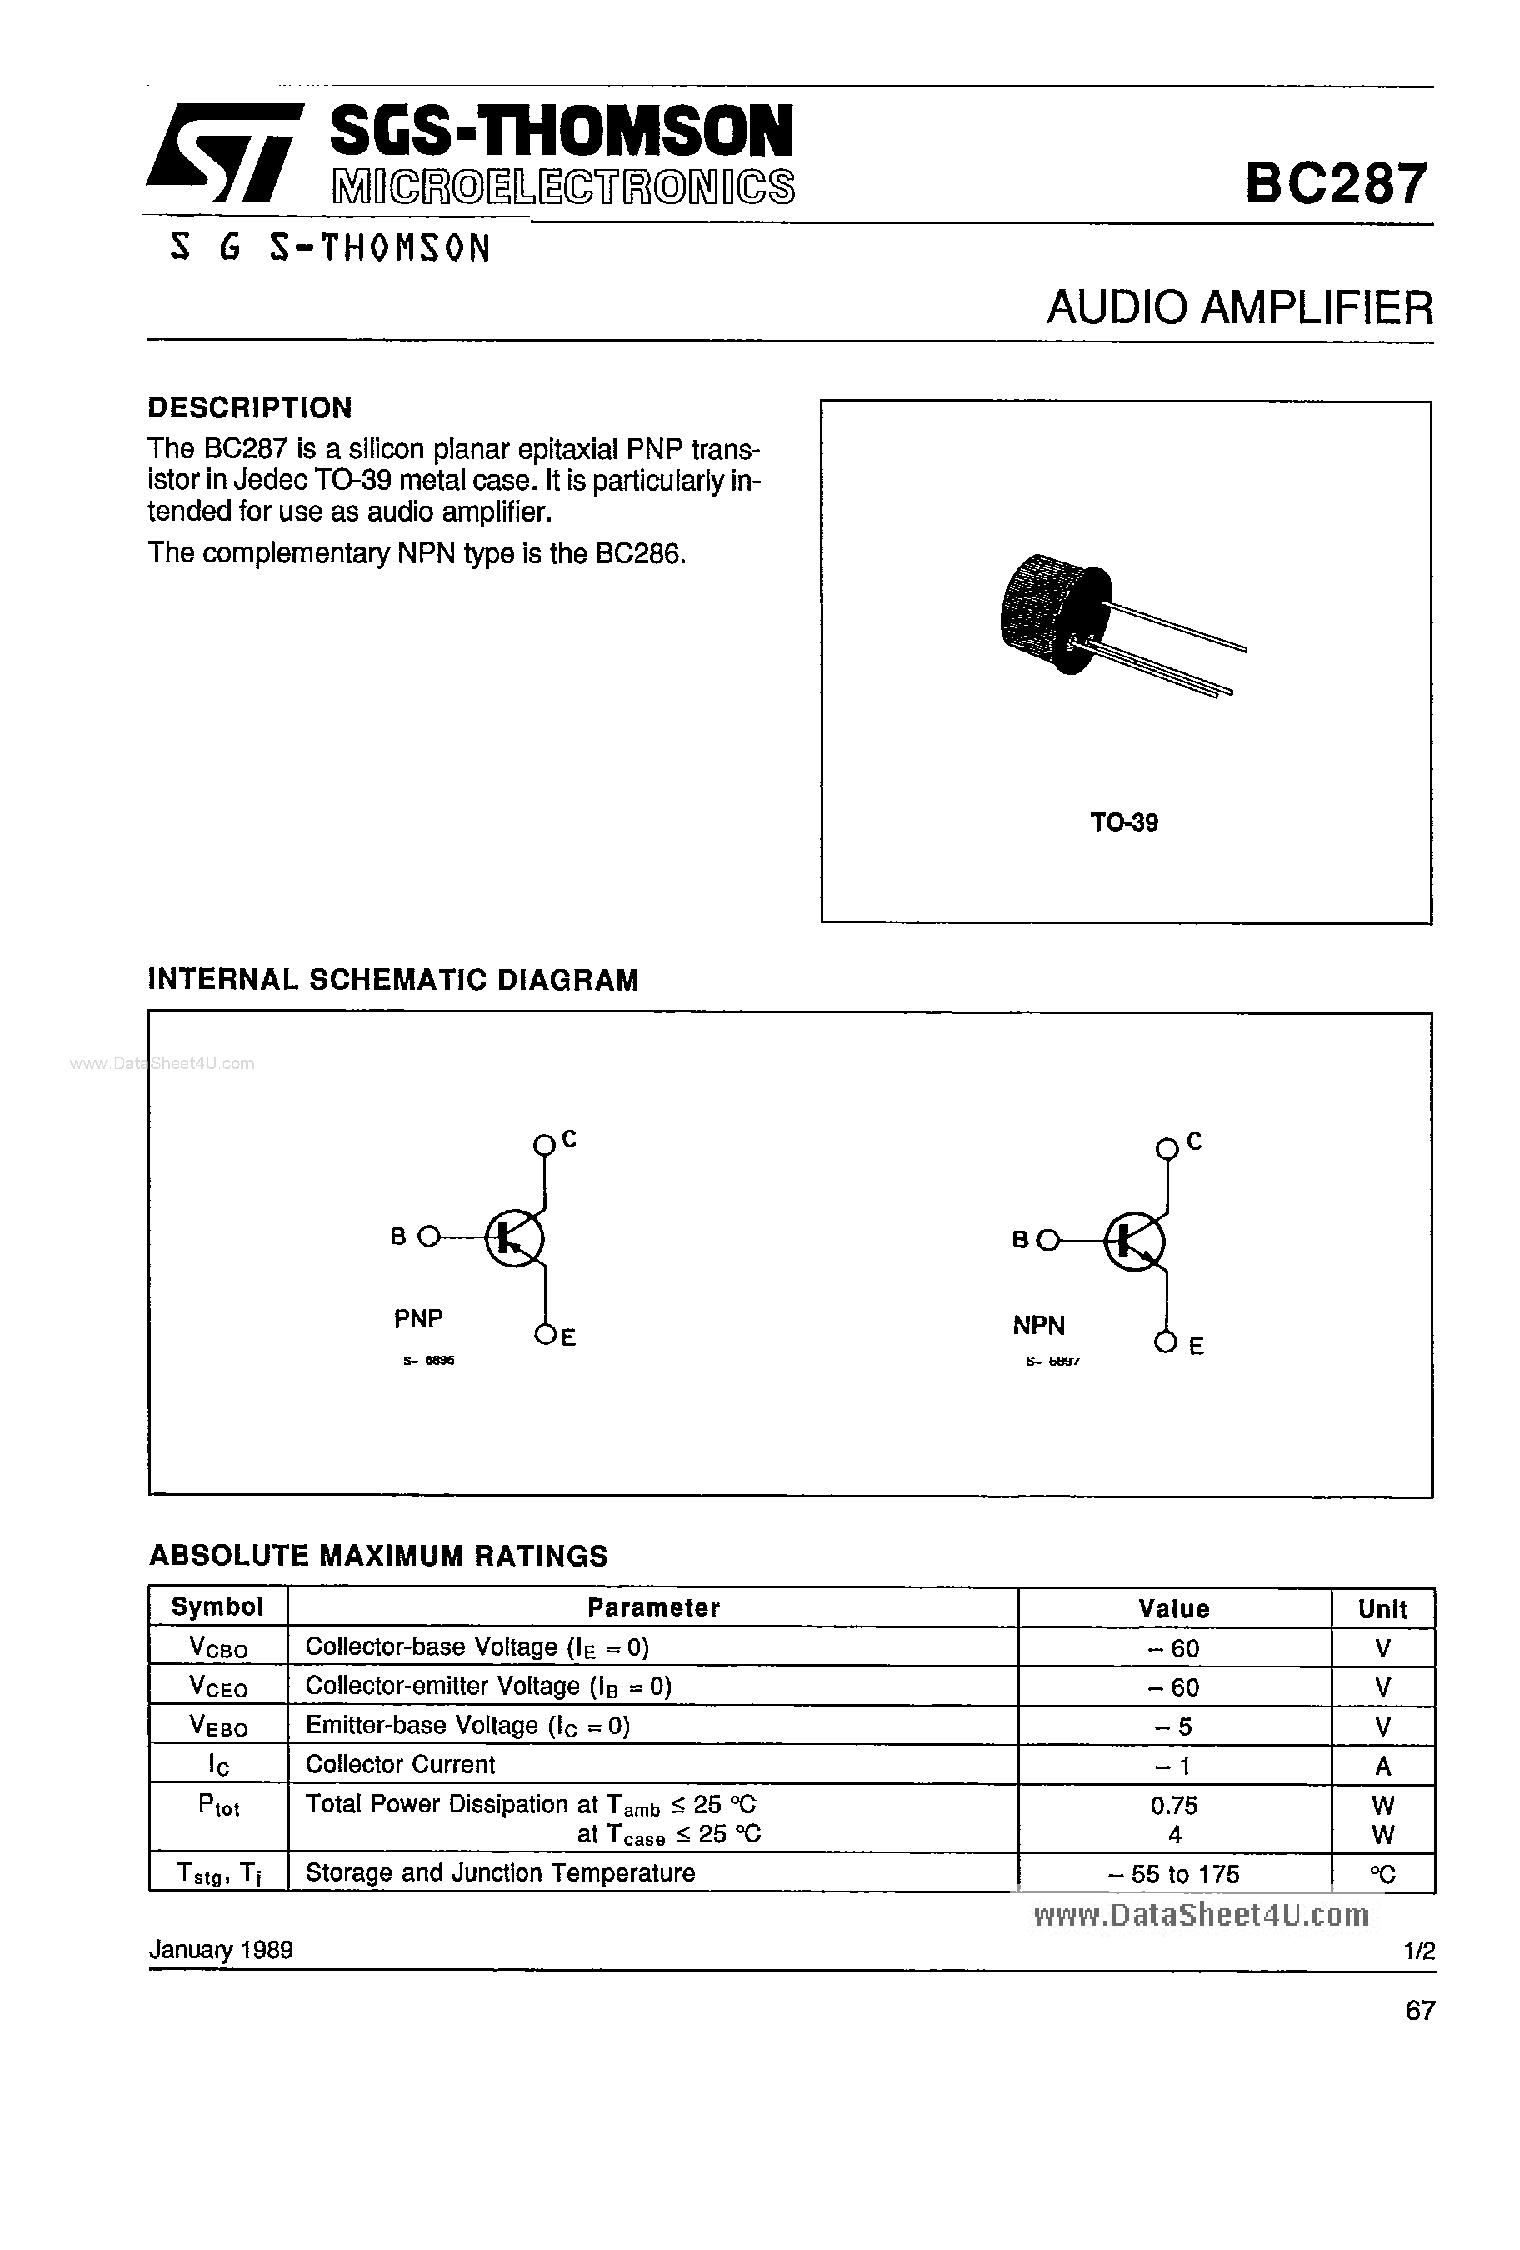 Datasheet BC287 - AUdio Amplifier page 1